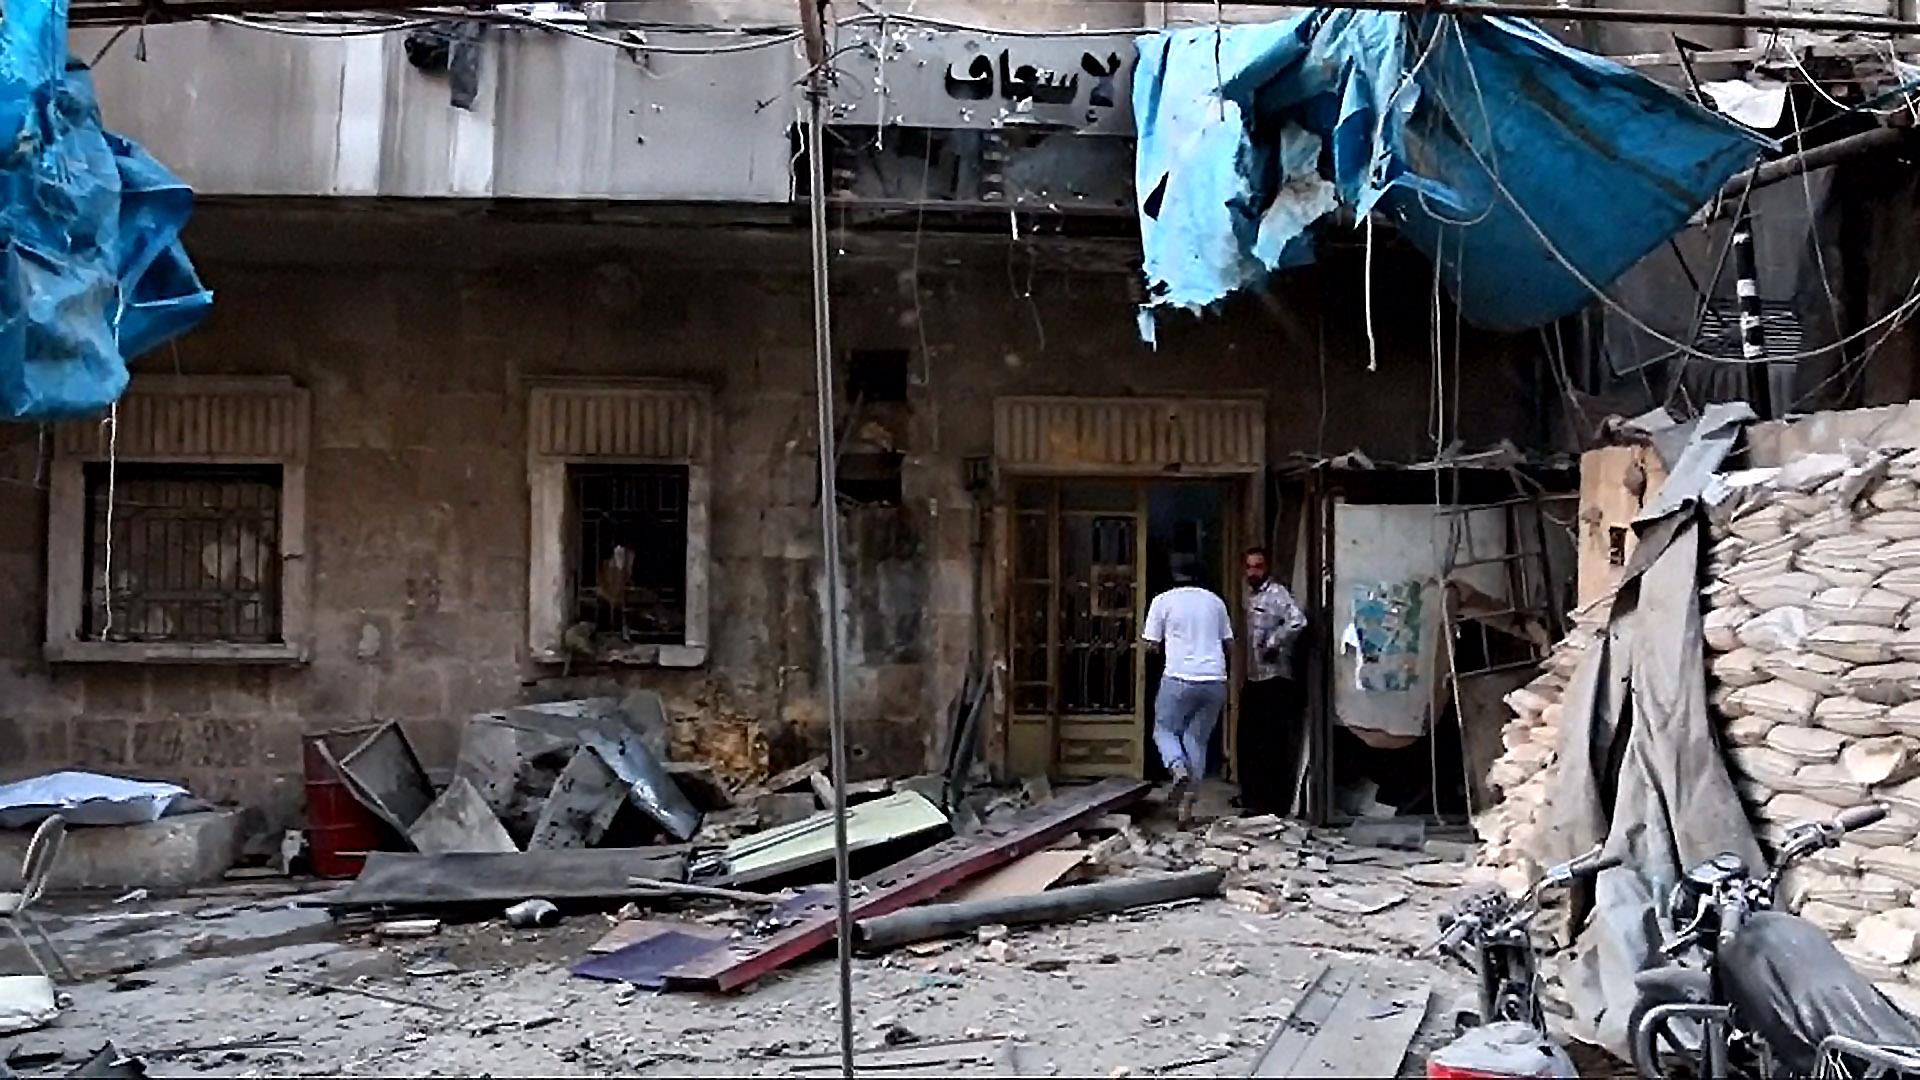 Reallifecam video in Aleppo